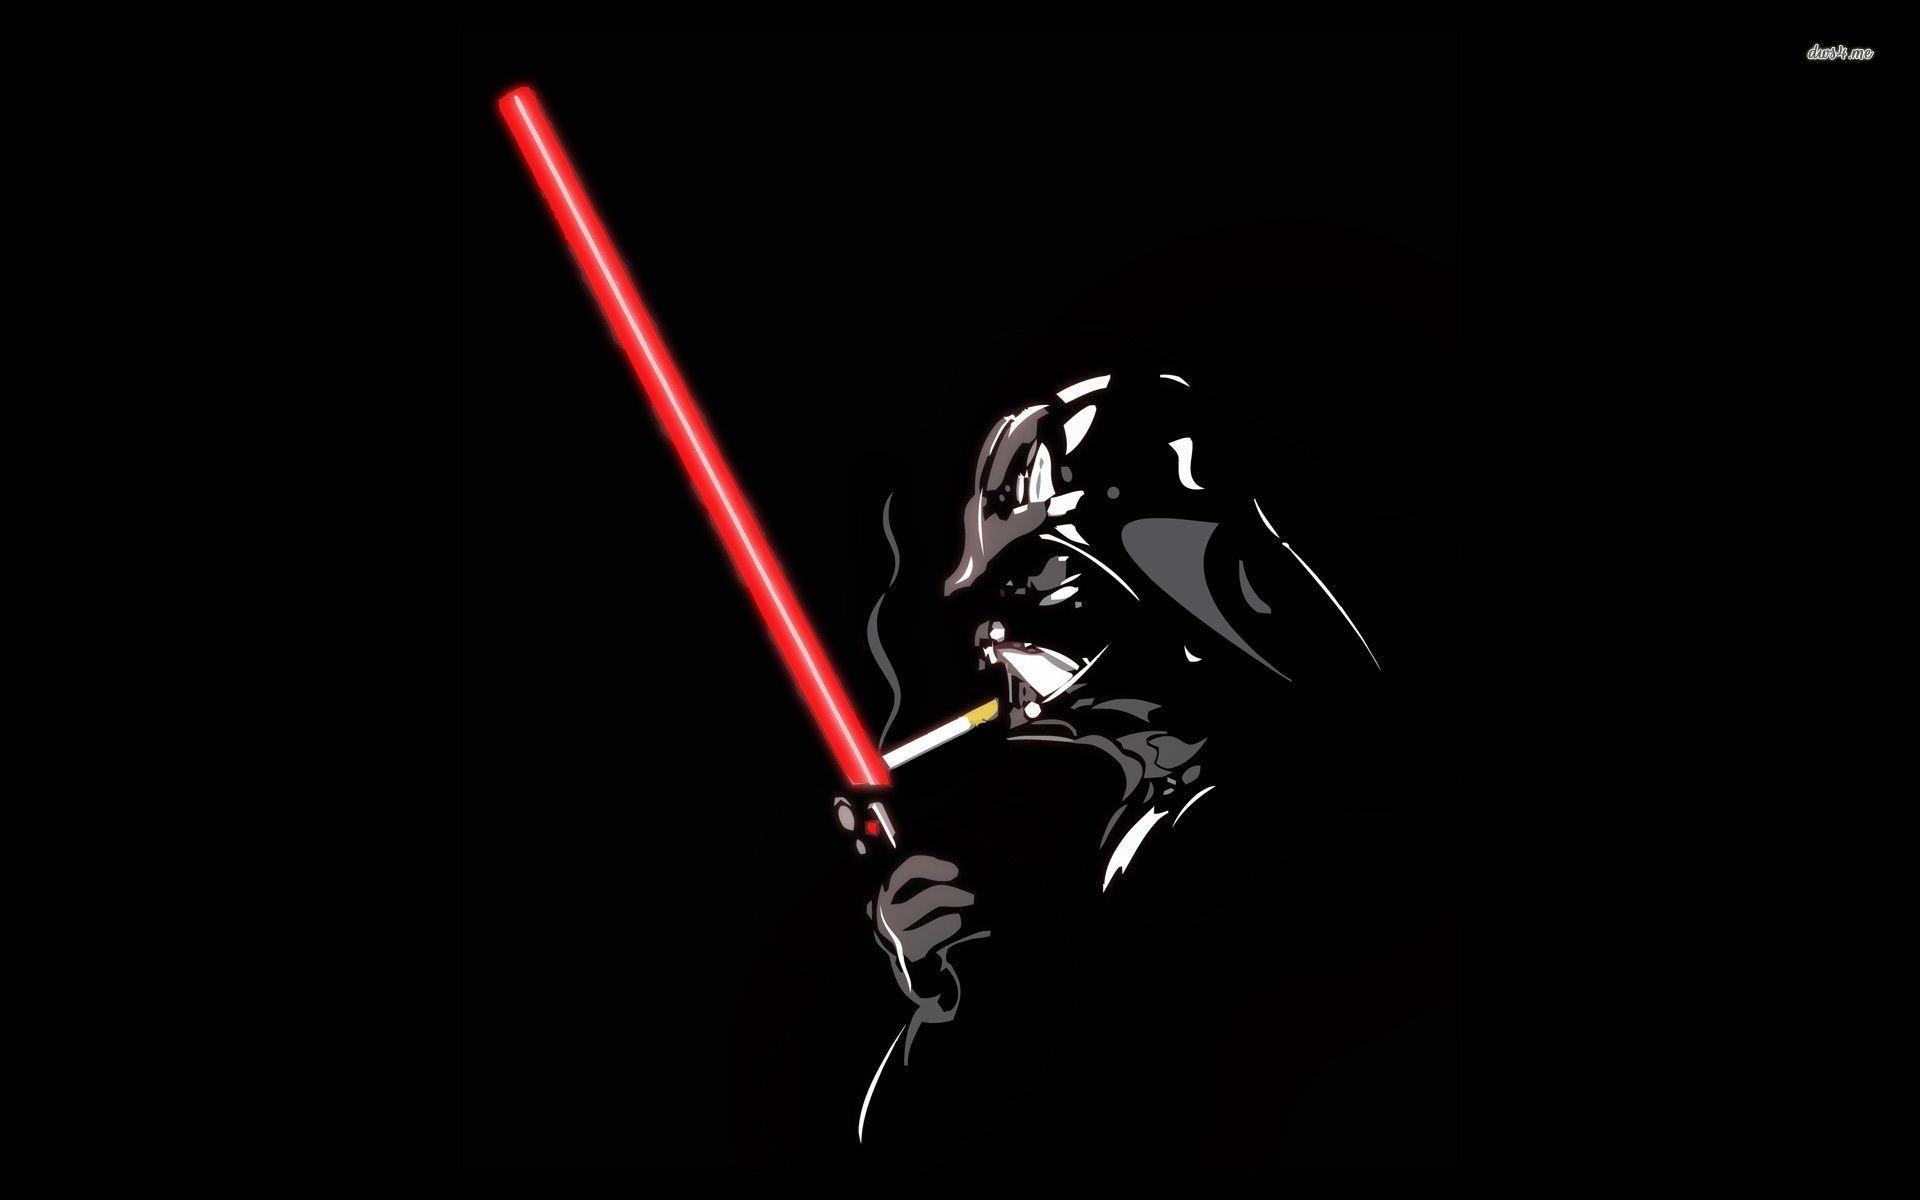 Darth Vader Wallpapers - Top Free Darth Vader Backgrounds - WallpaperAccess